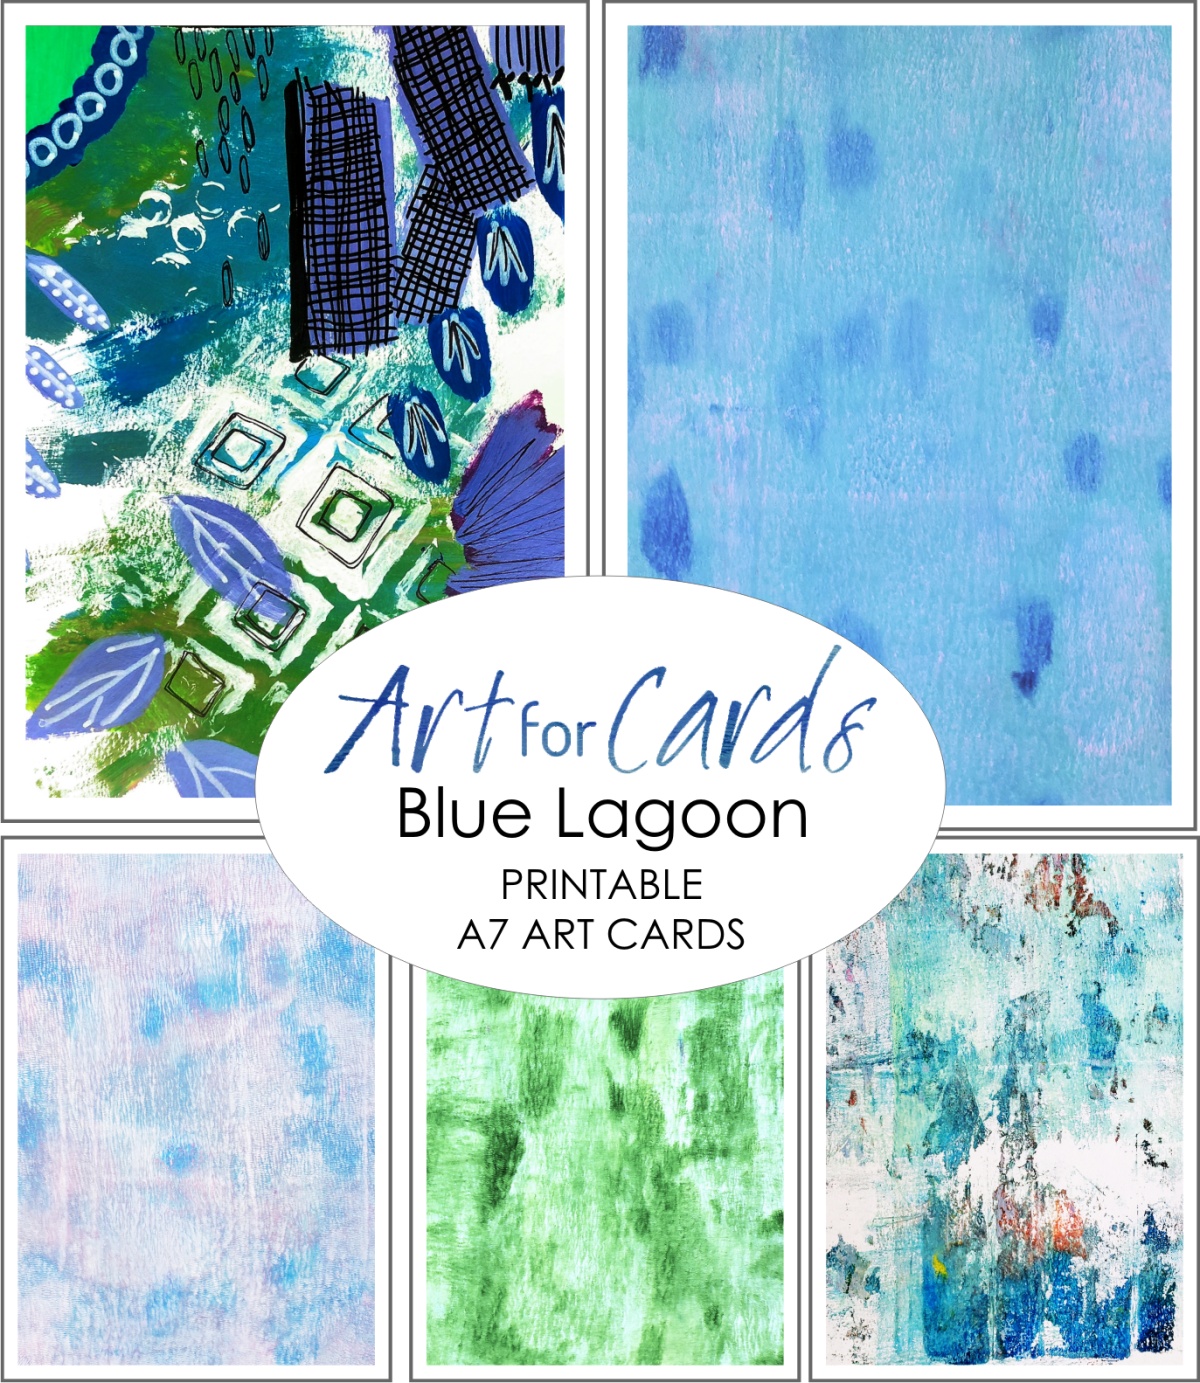 Blue Lagoon A7 Art Cards